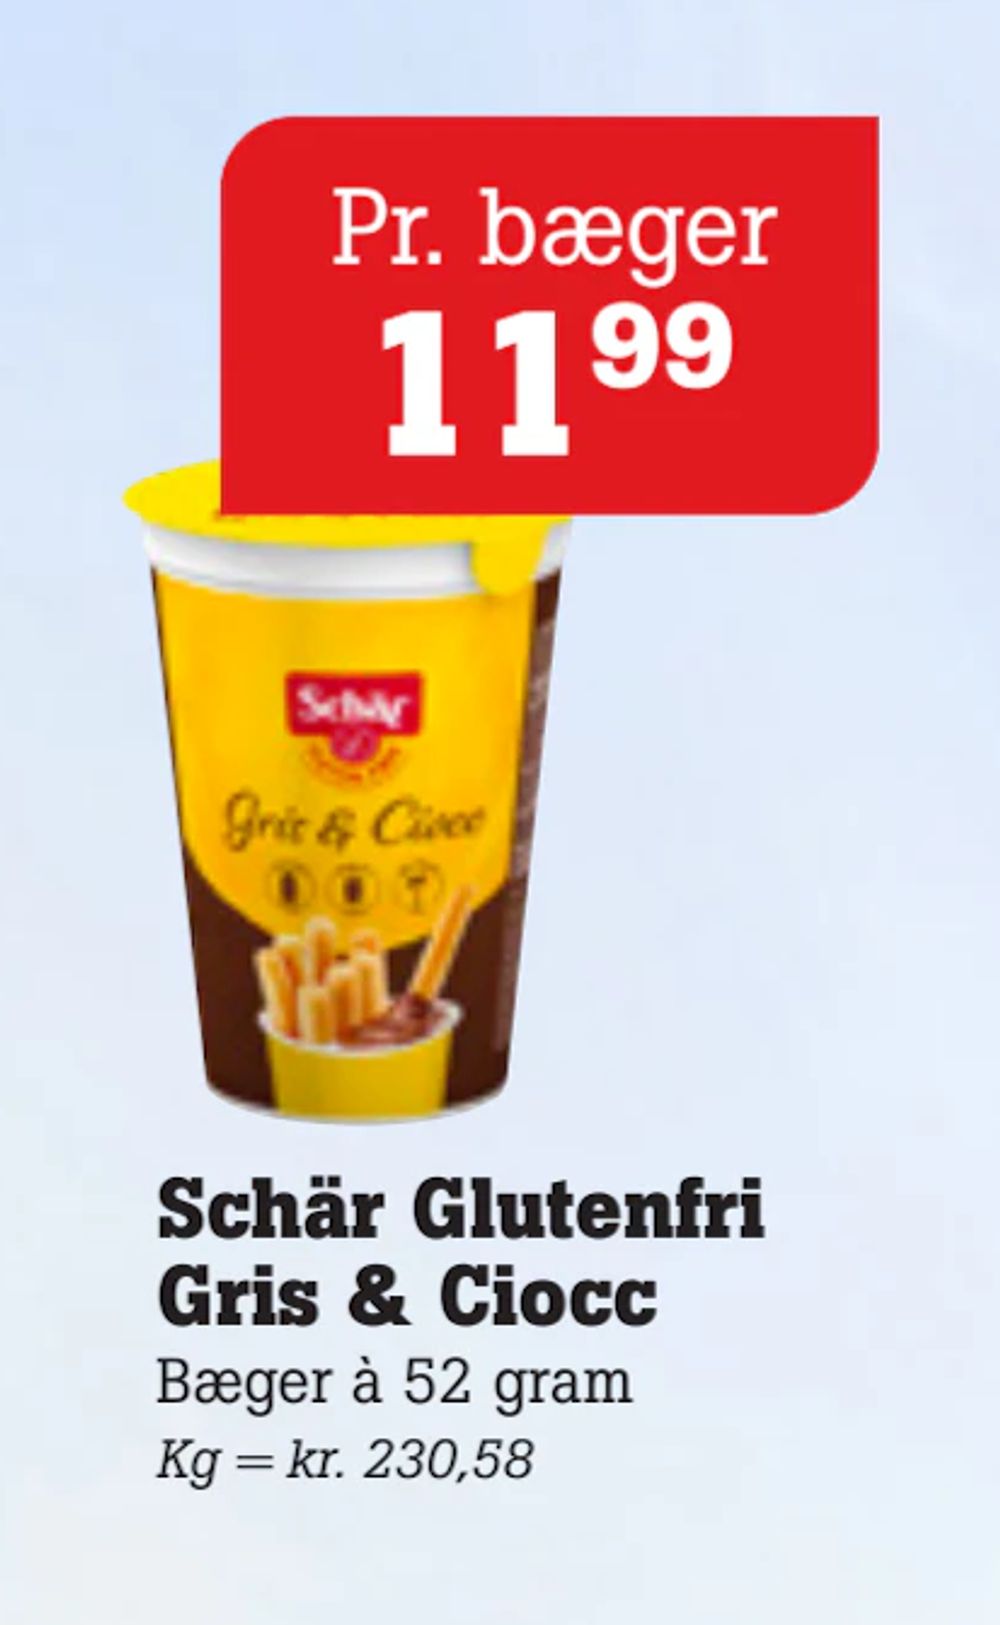 Tilbud på Schär Glutenfri Gris & Ciocc fra Poetzsch Padborg til 11,99 kr.